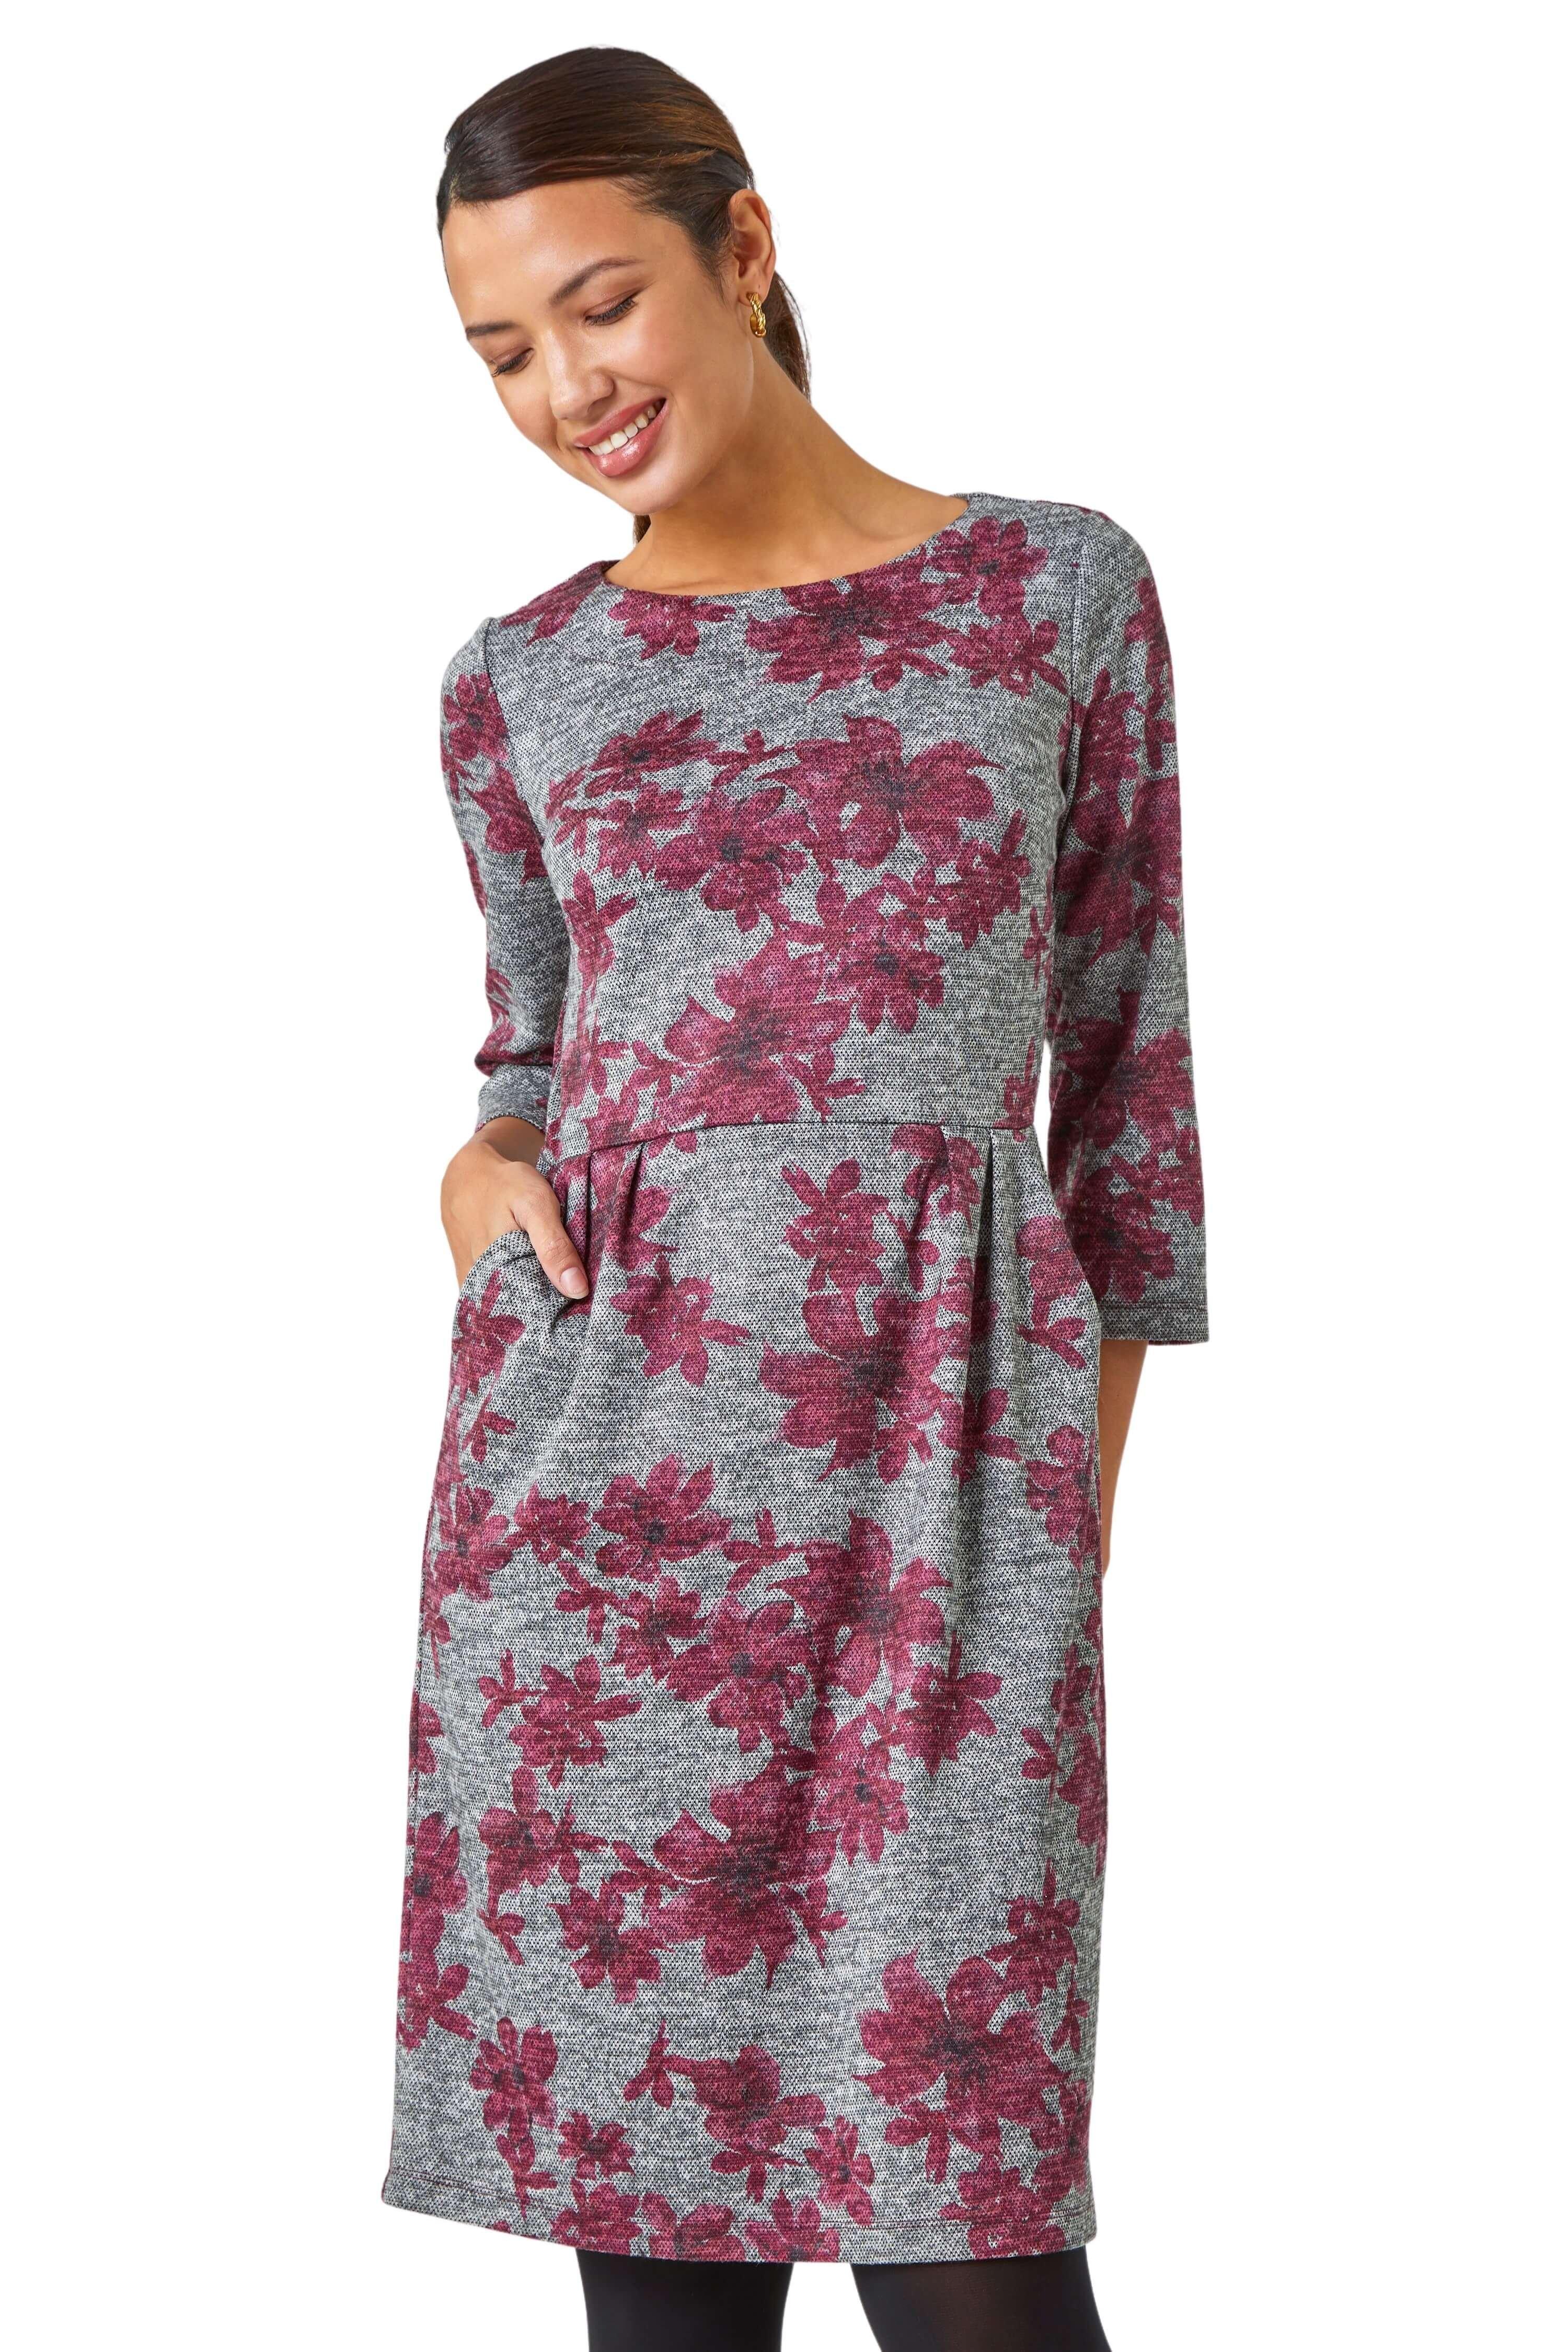 Floral Print Pocket Stretch Dress